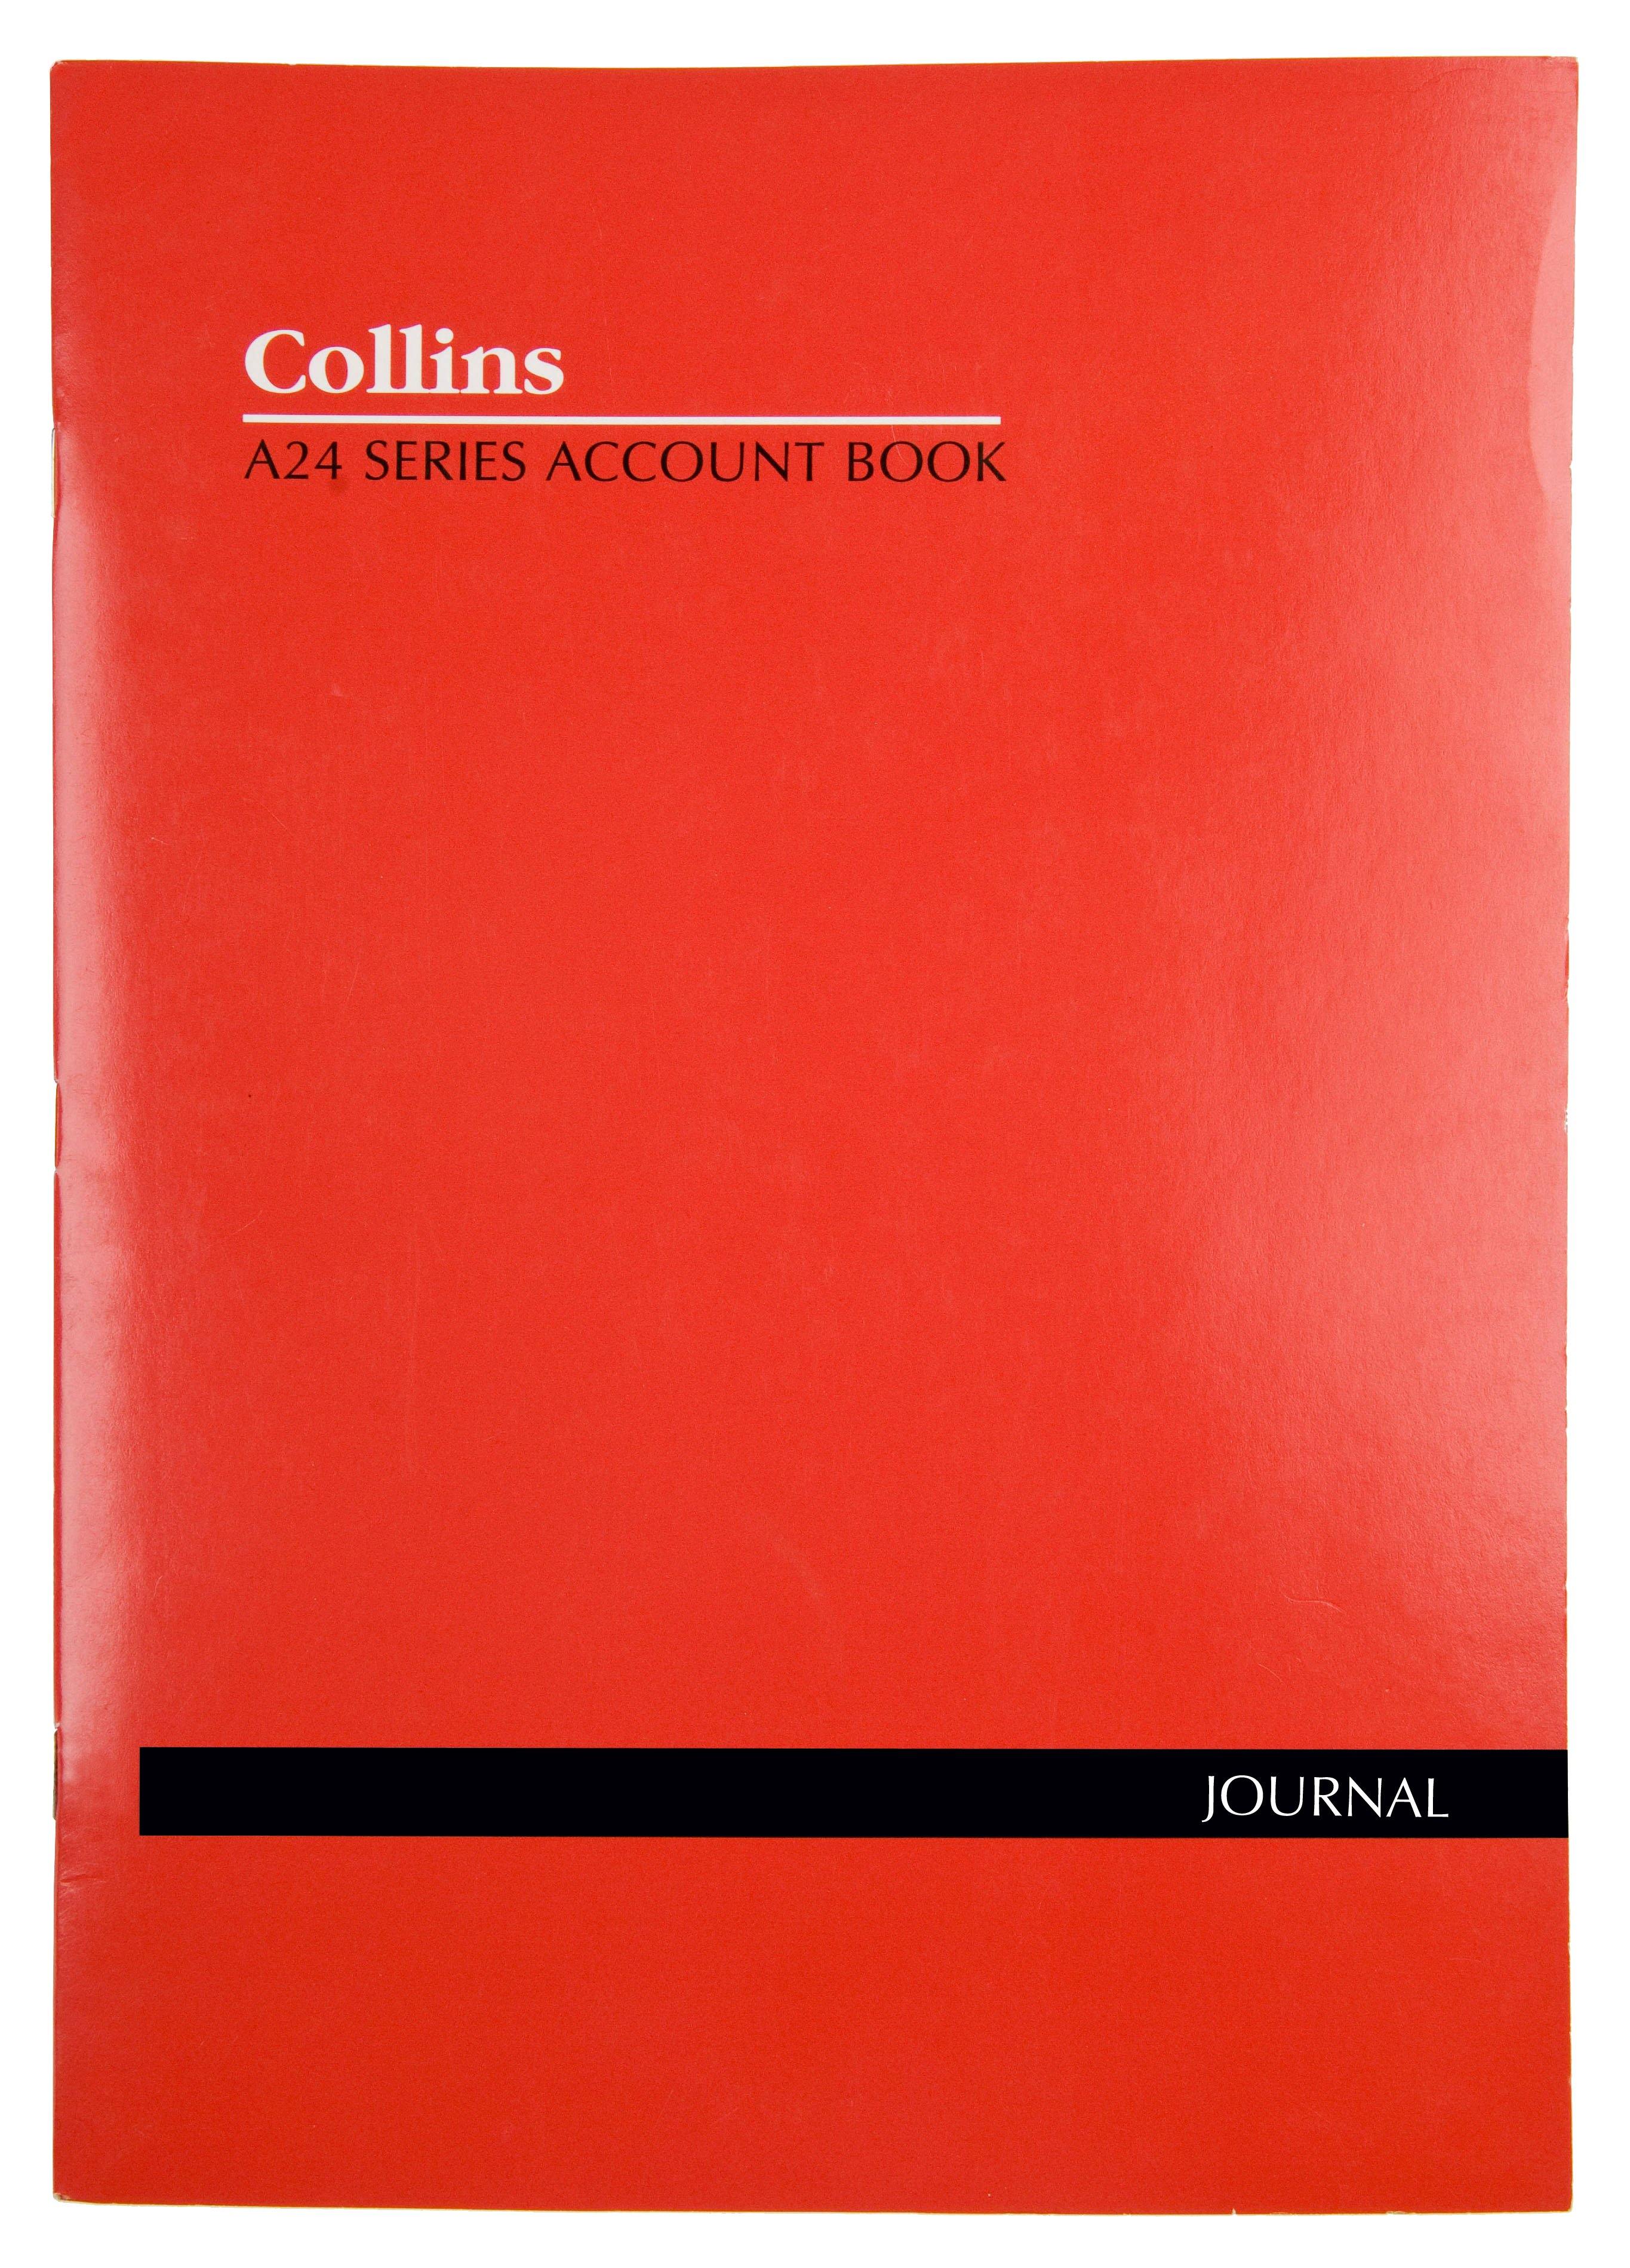 Account Book Series 'A24' Journal - Collins Debden